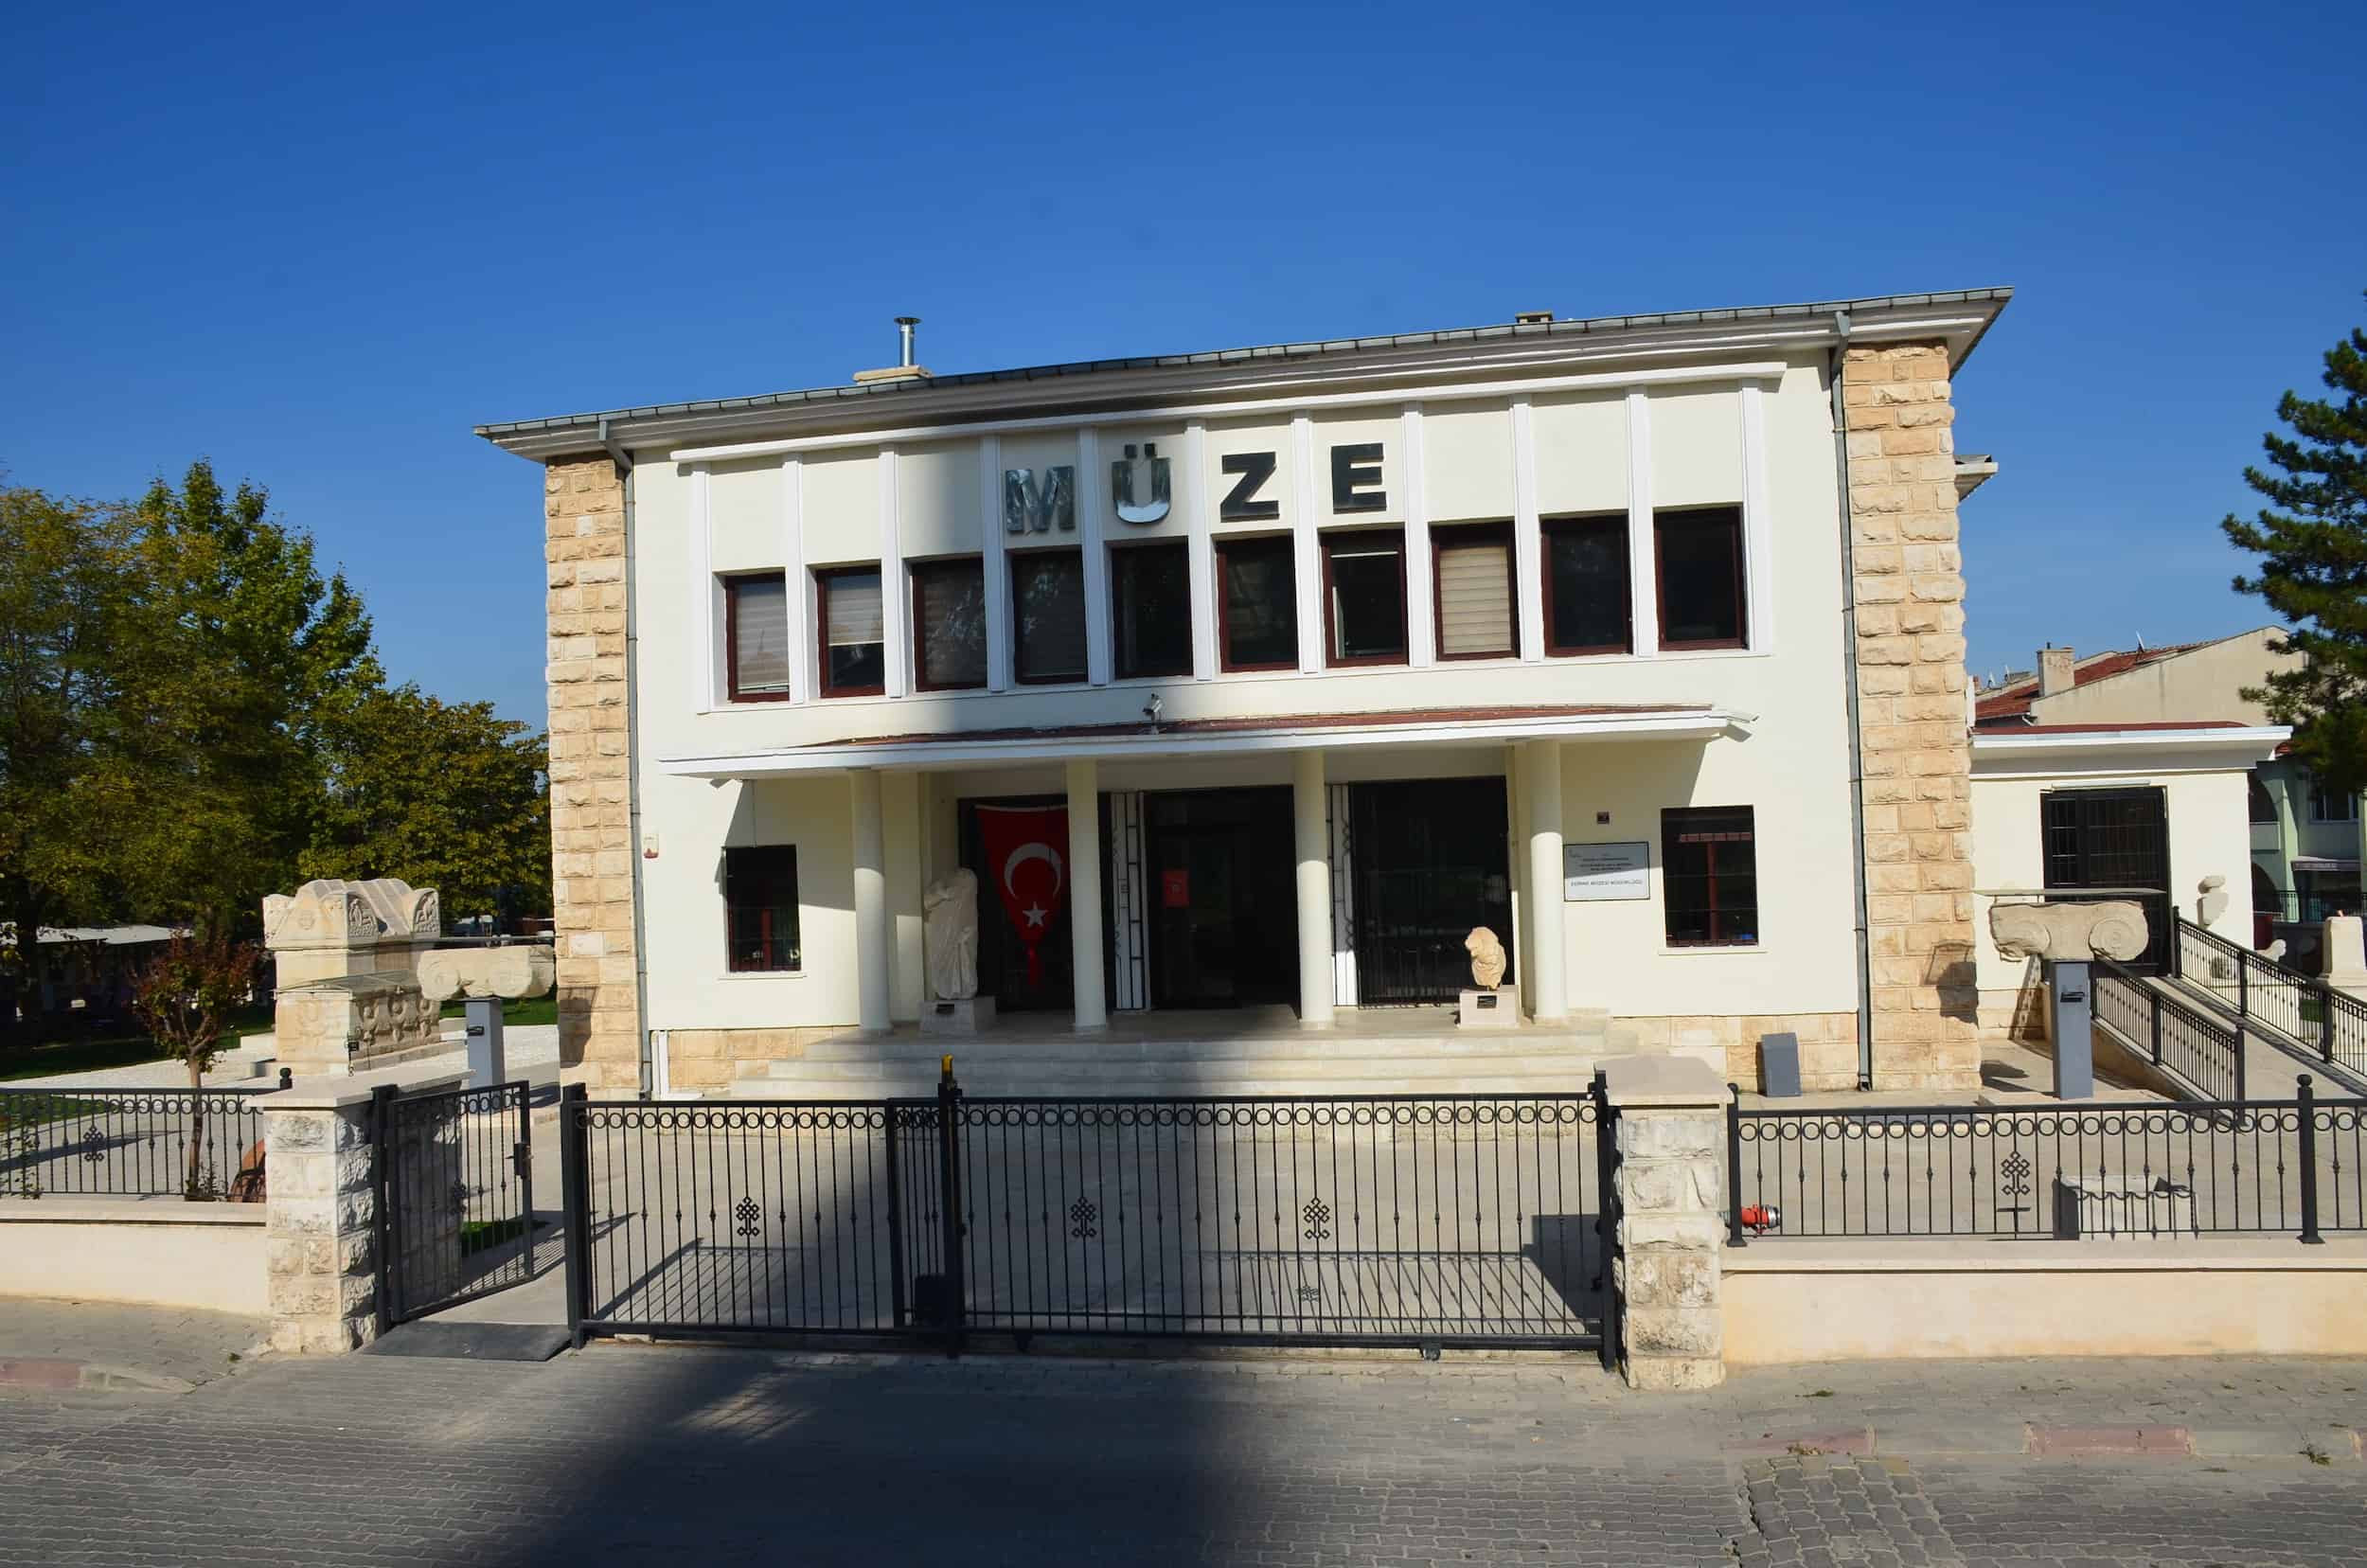 Edirne Archaeology and Ethnography Museum in Edirne, Turkey